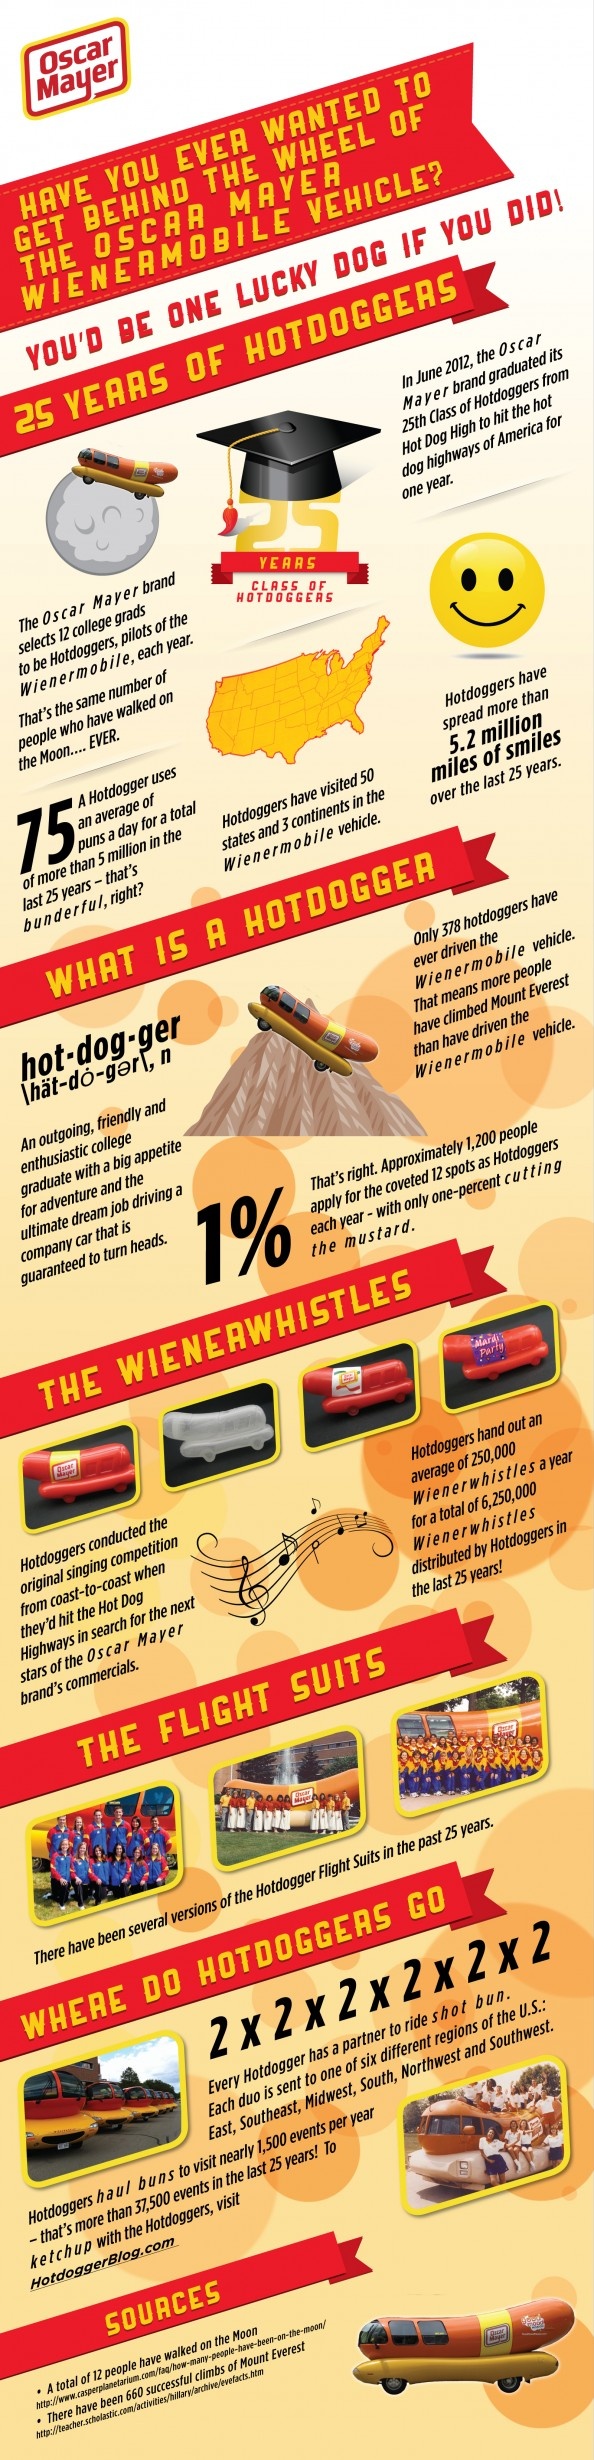 Food infographic - Oscar Mayer: 25 Years of Hotdoggers - InfographicNow ...